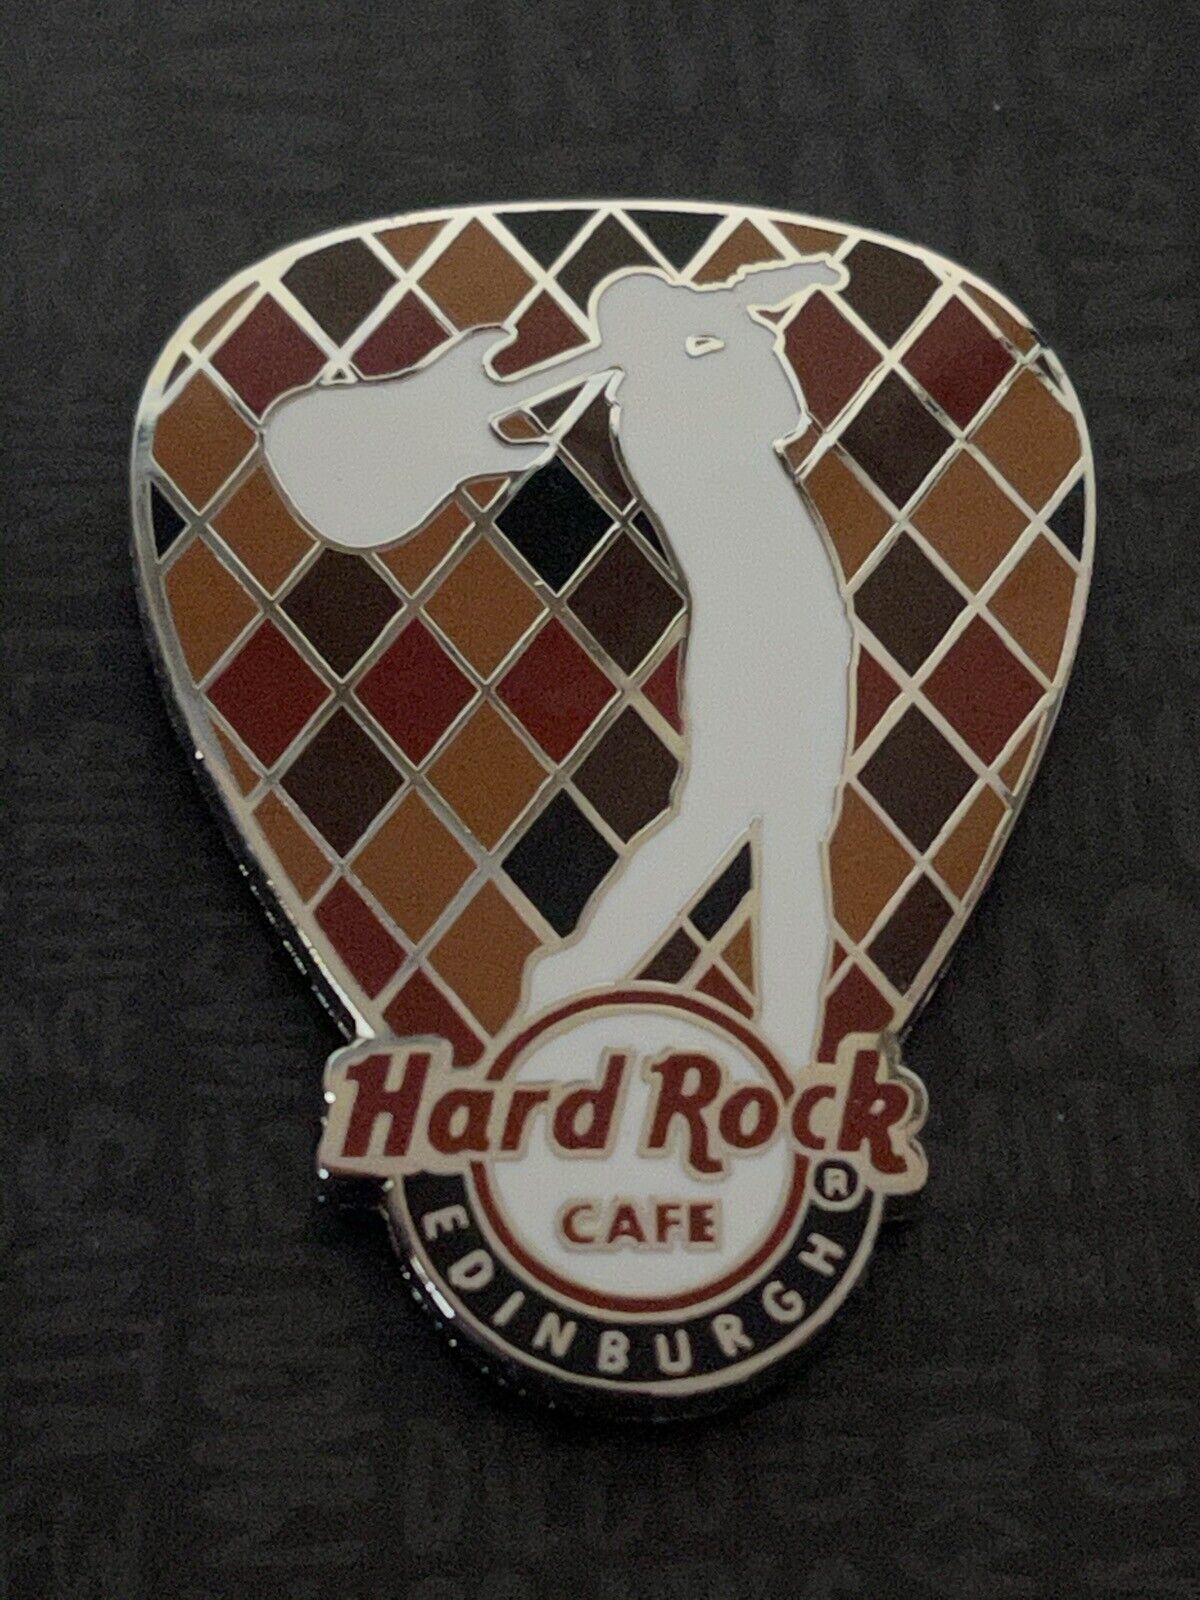 Hard Rock Cafe Edinburgh Pin Badge - Core Golf Guitar Pick